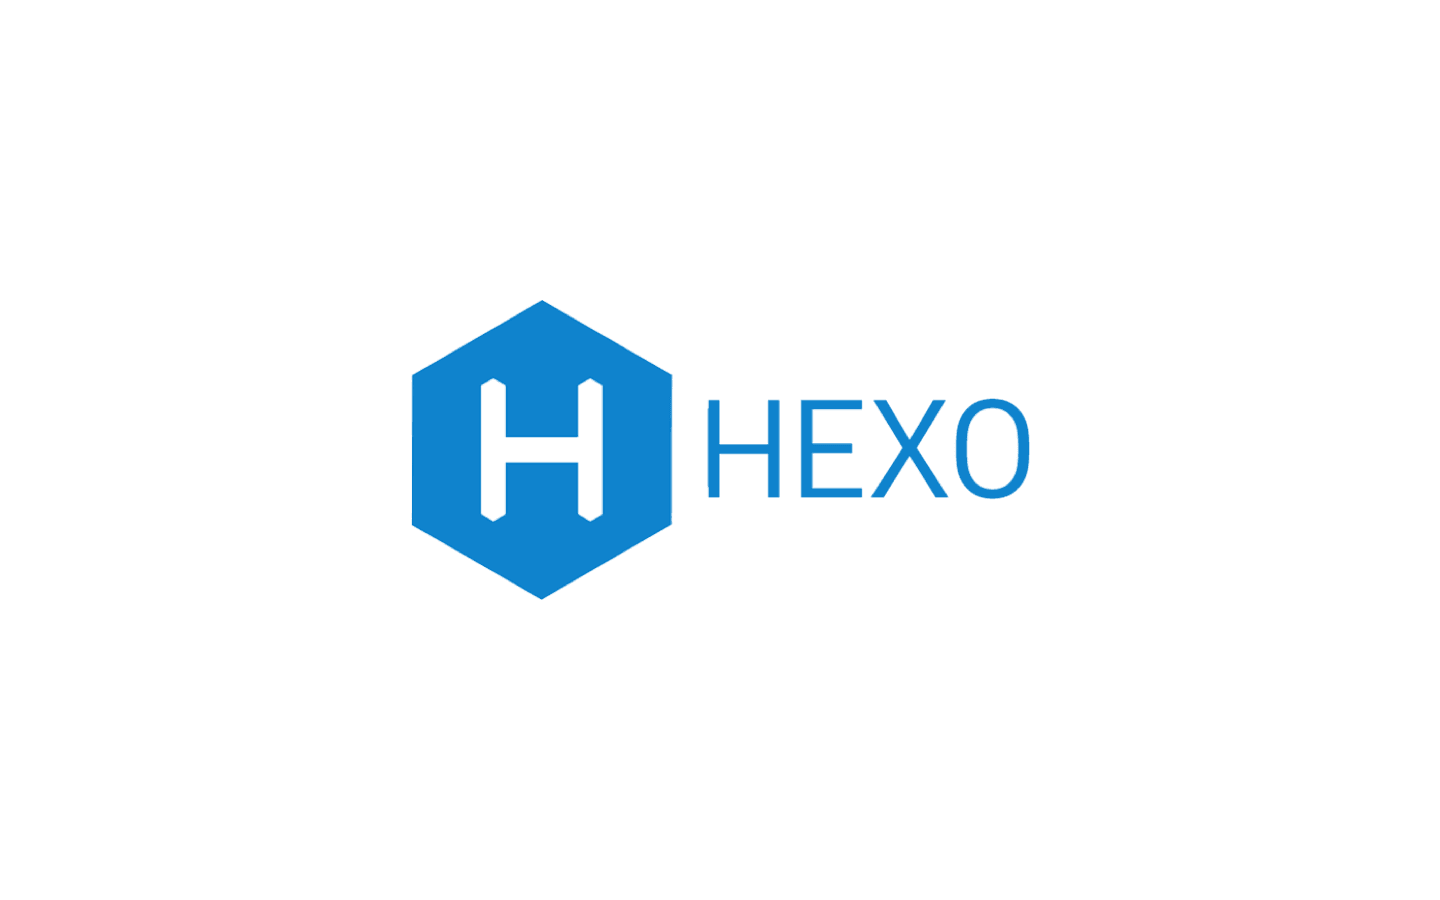 Deploy hexo blog to coding and Github